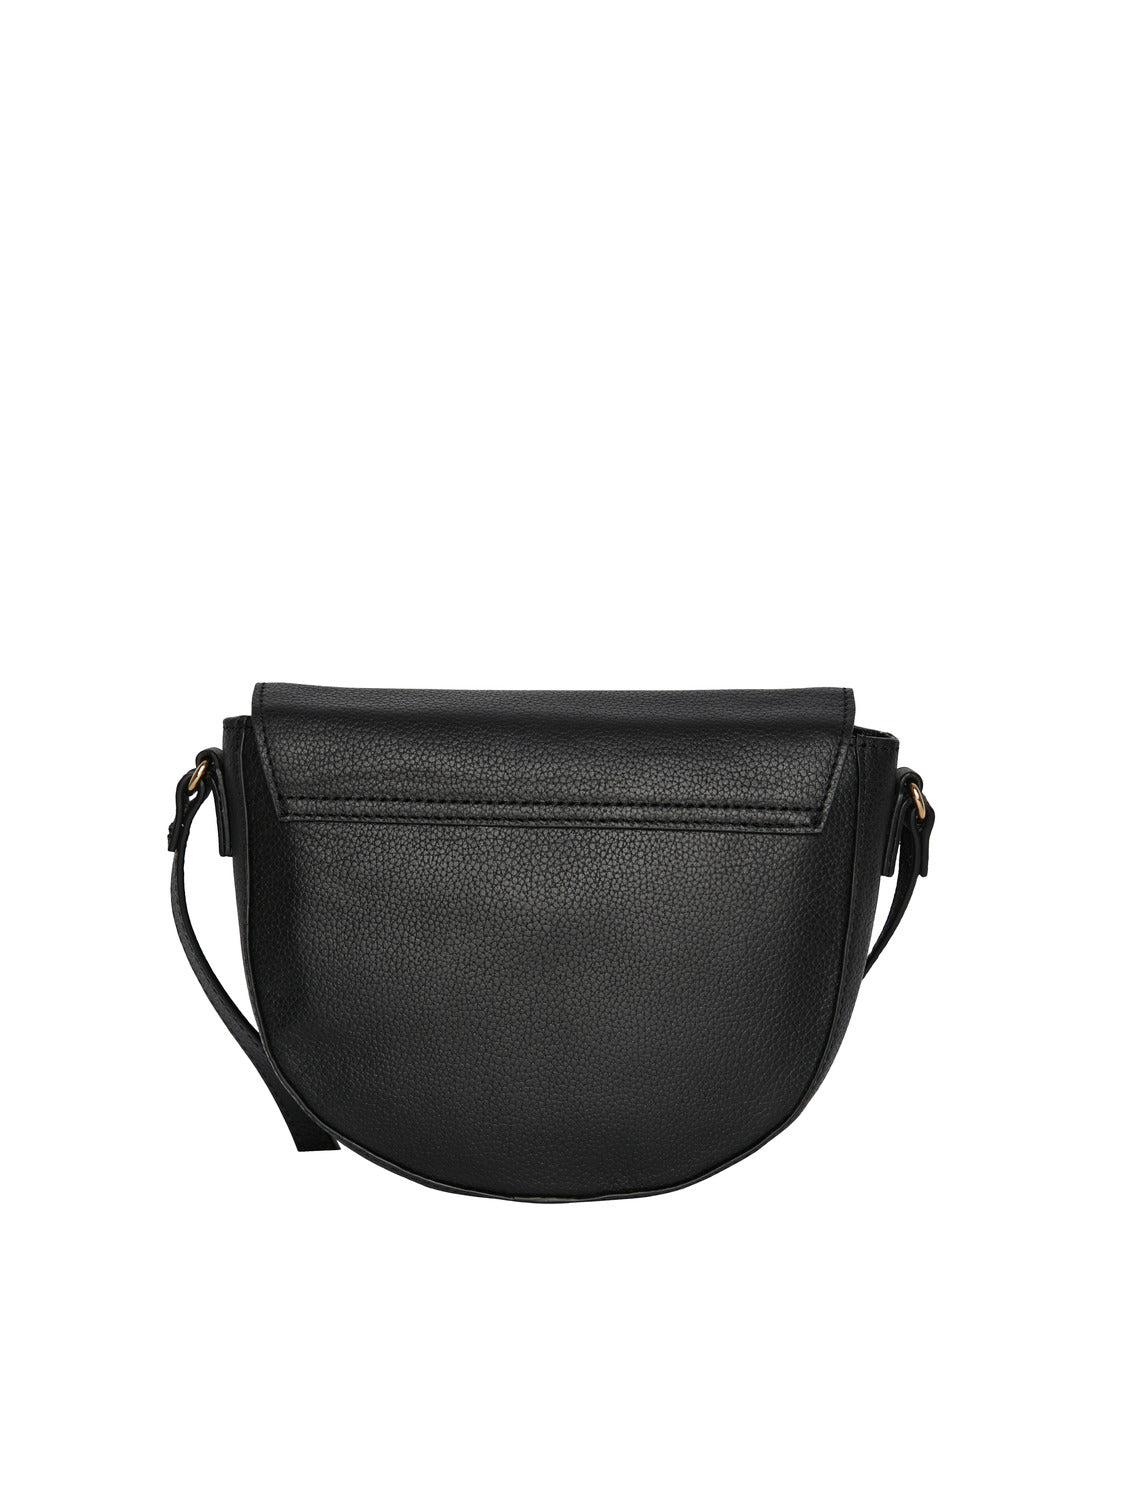 PCJETTE Handbag - Black